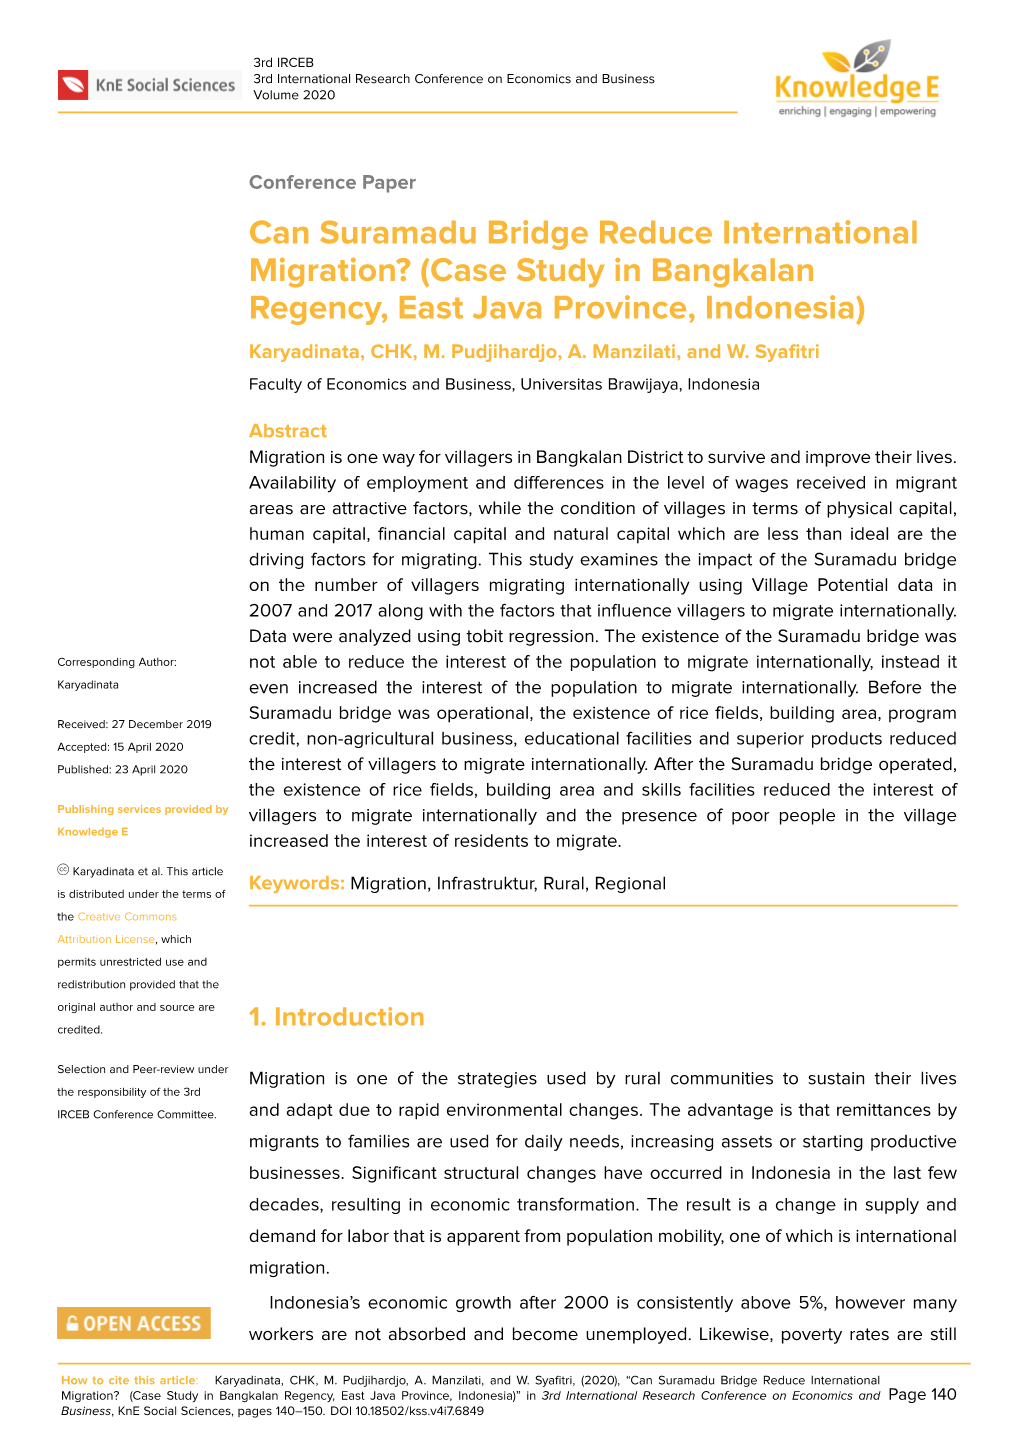 Can Suramadu Bridge Reduce International Migration? (Case Study in Bangkalan Regency, East Java Province, Indonesia) Karyadinata, CHK, M